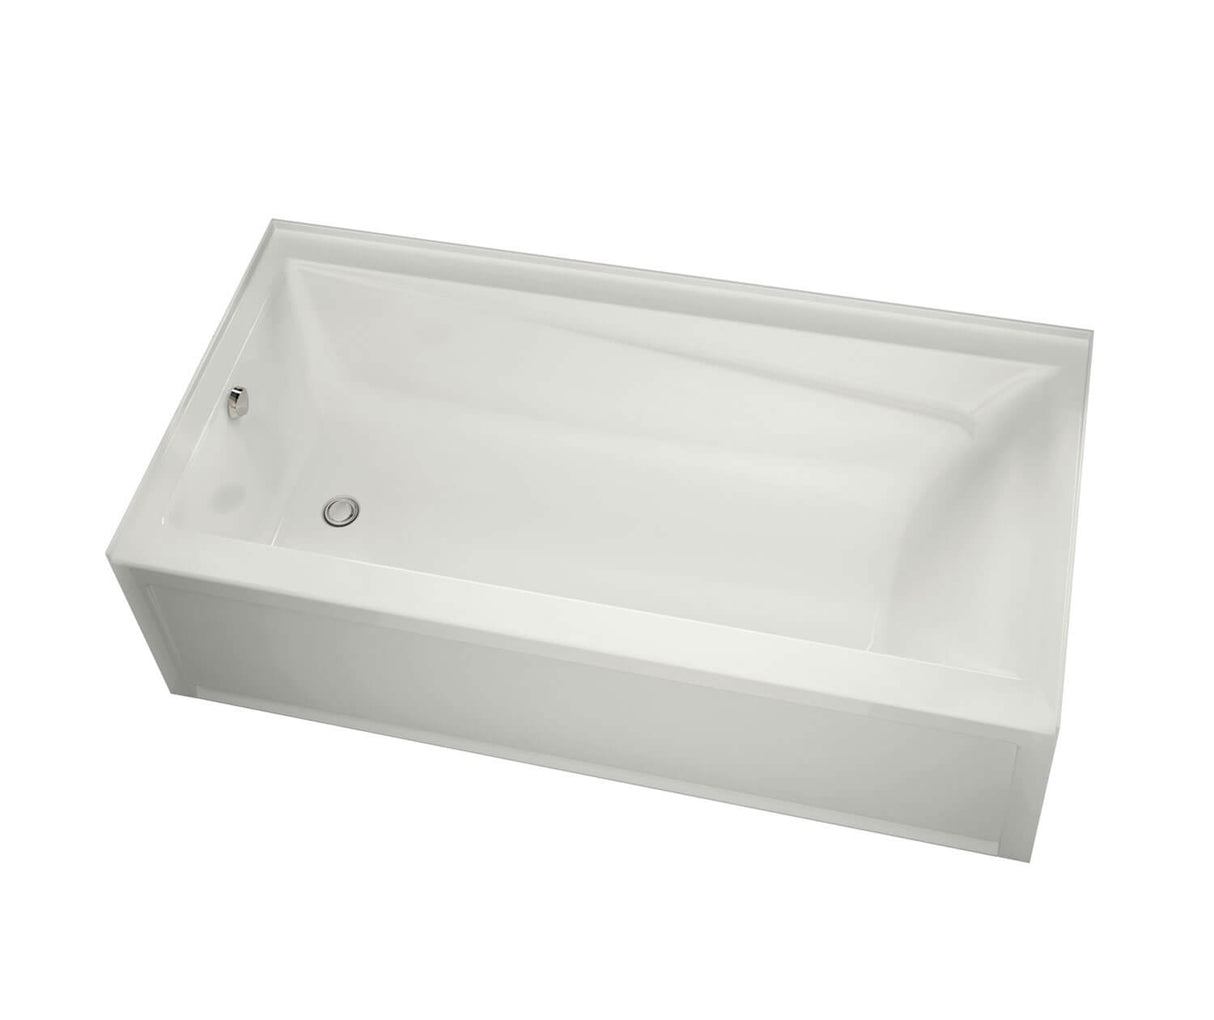 MAAX 106225-000-001-100 Exhibit 7232 IFS Acrylic Alcove Left-Hand Drain Bathtub in White